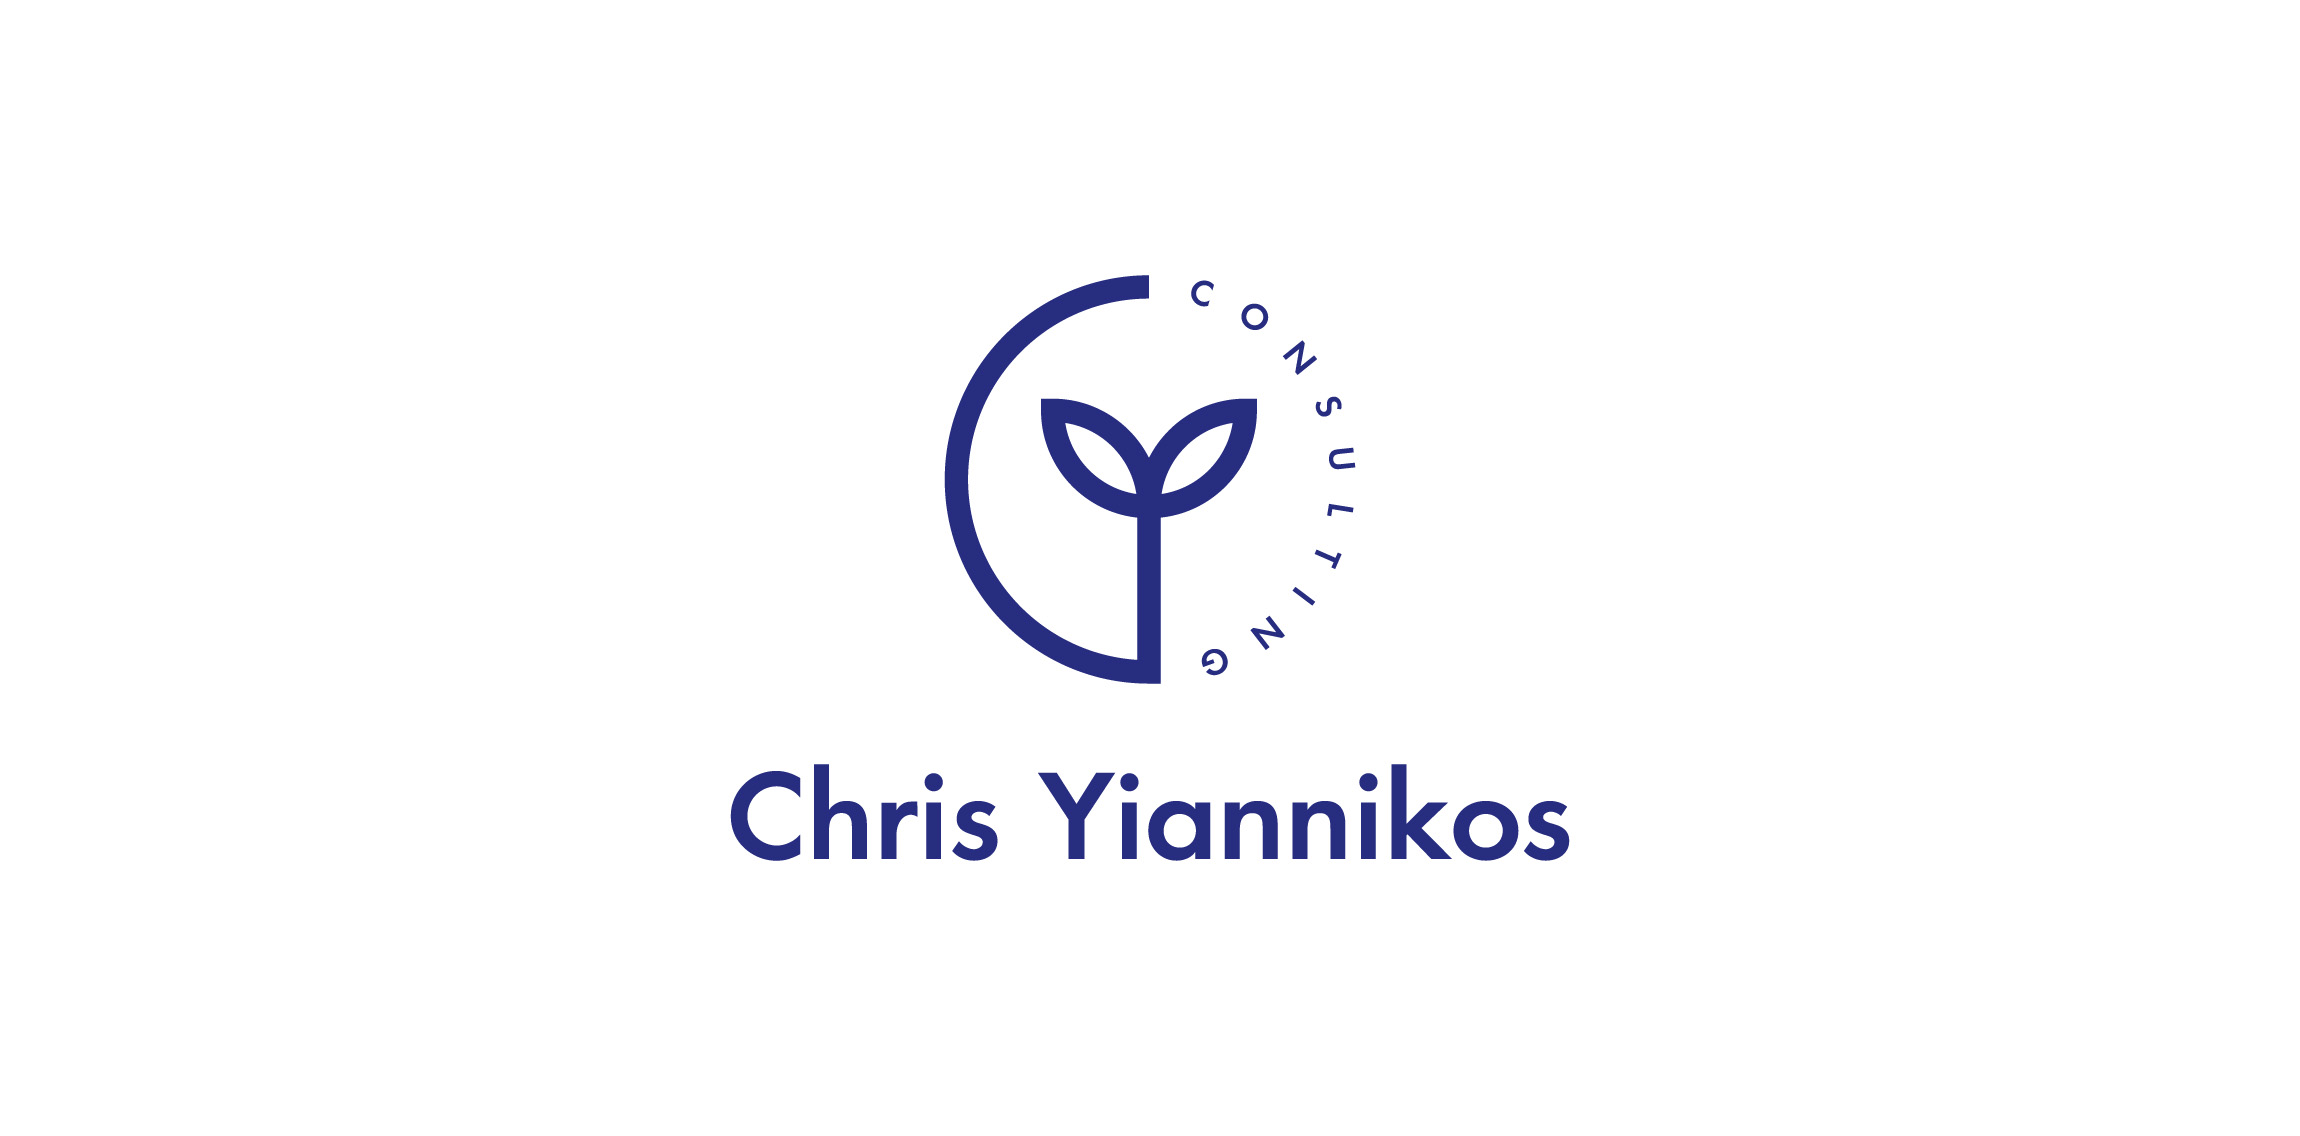 Chris Yiannikos Consulting